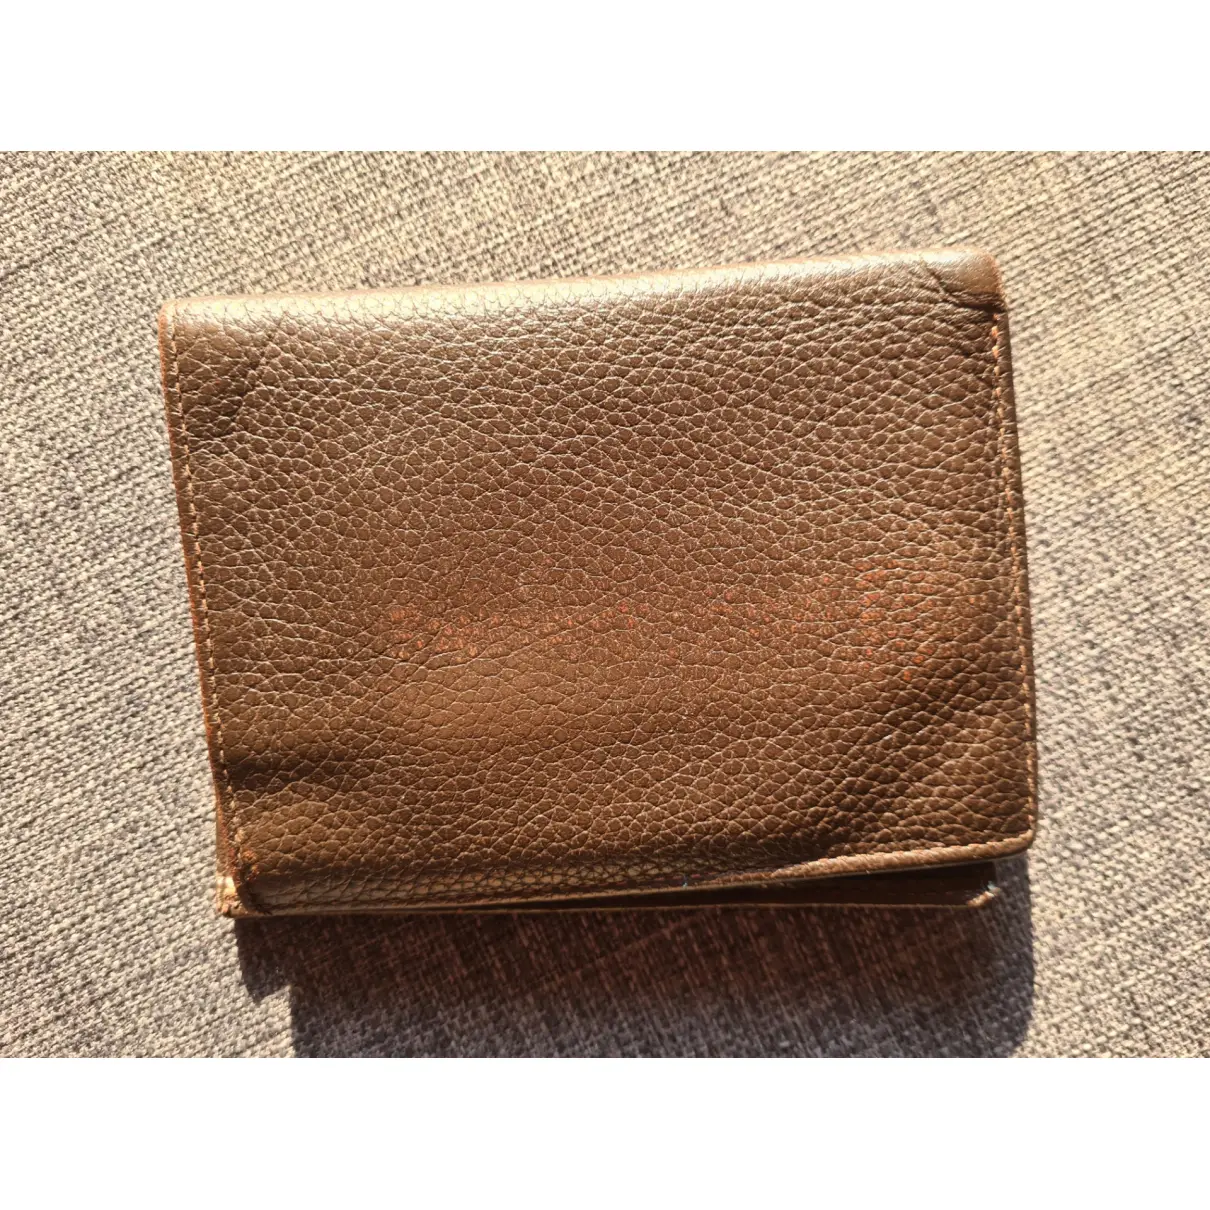 Buy Longchamp Leather small bag online